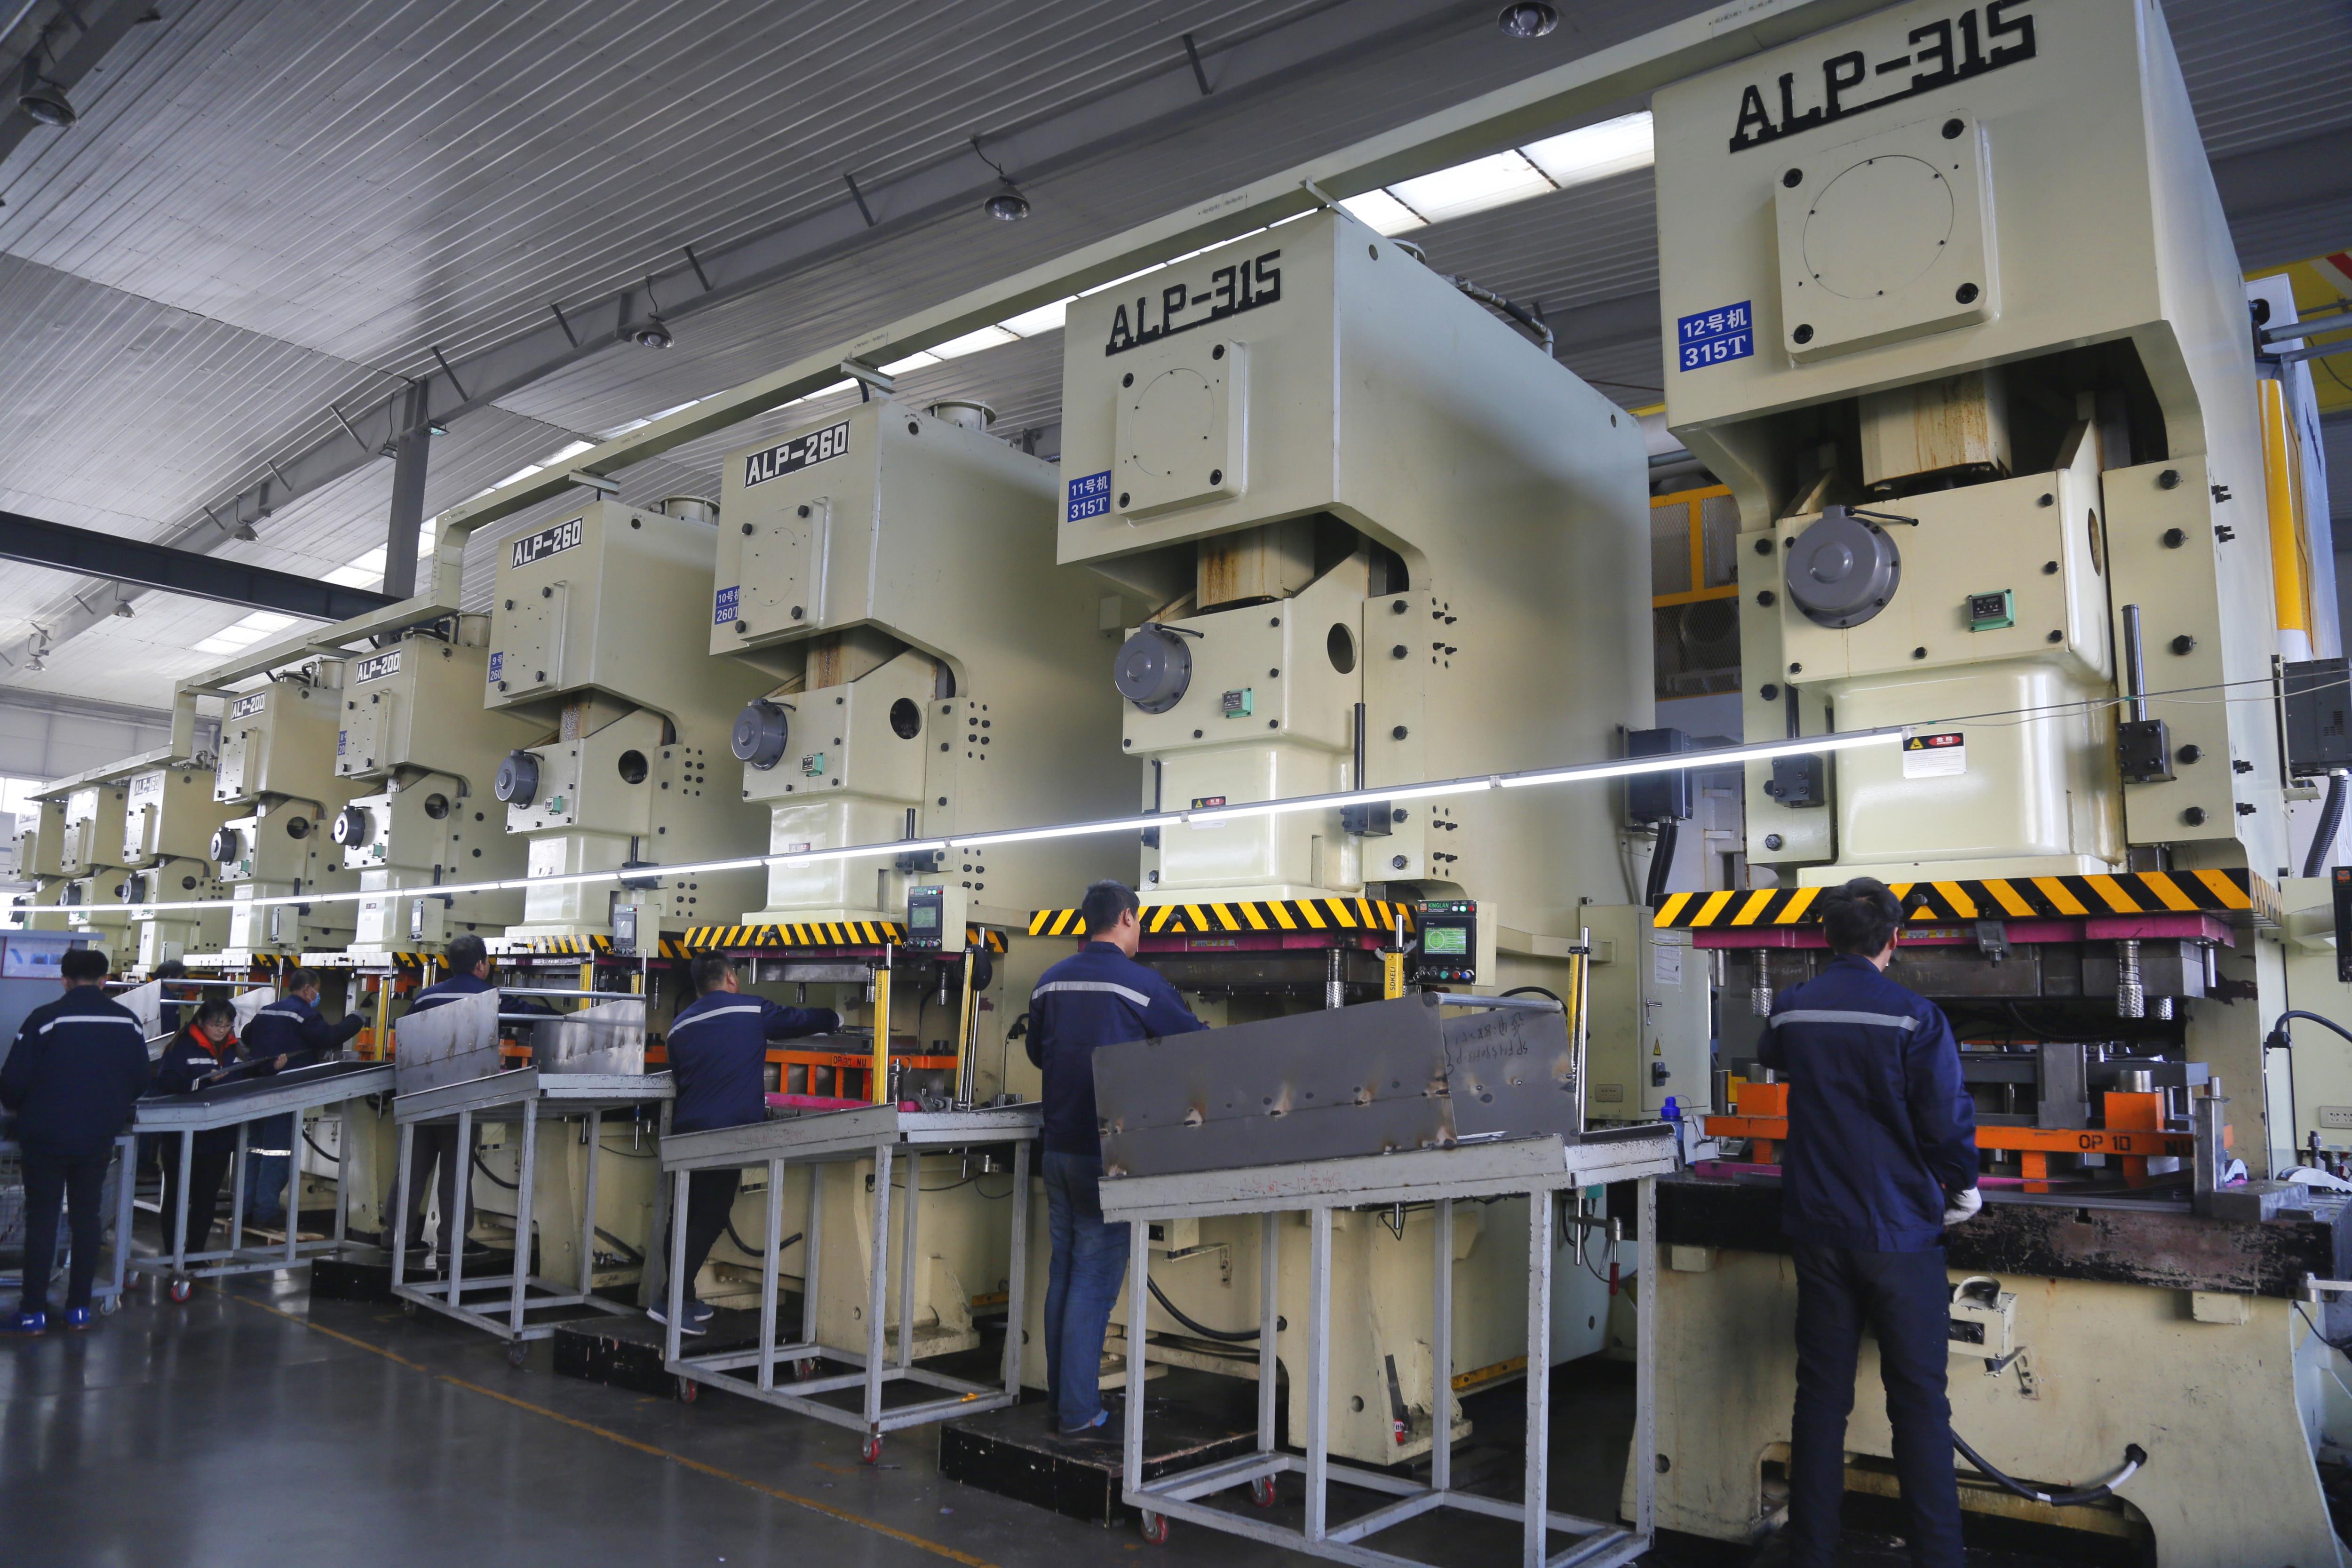 CNC pneumatic sheet metal press punching machine power punch press